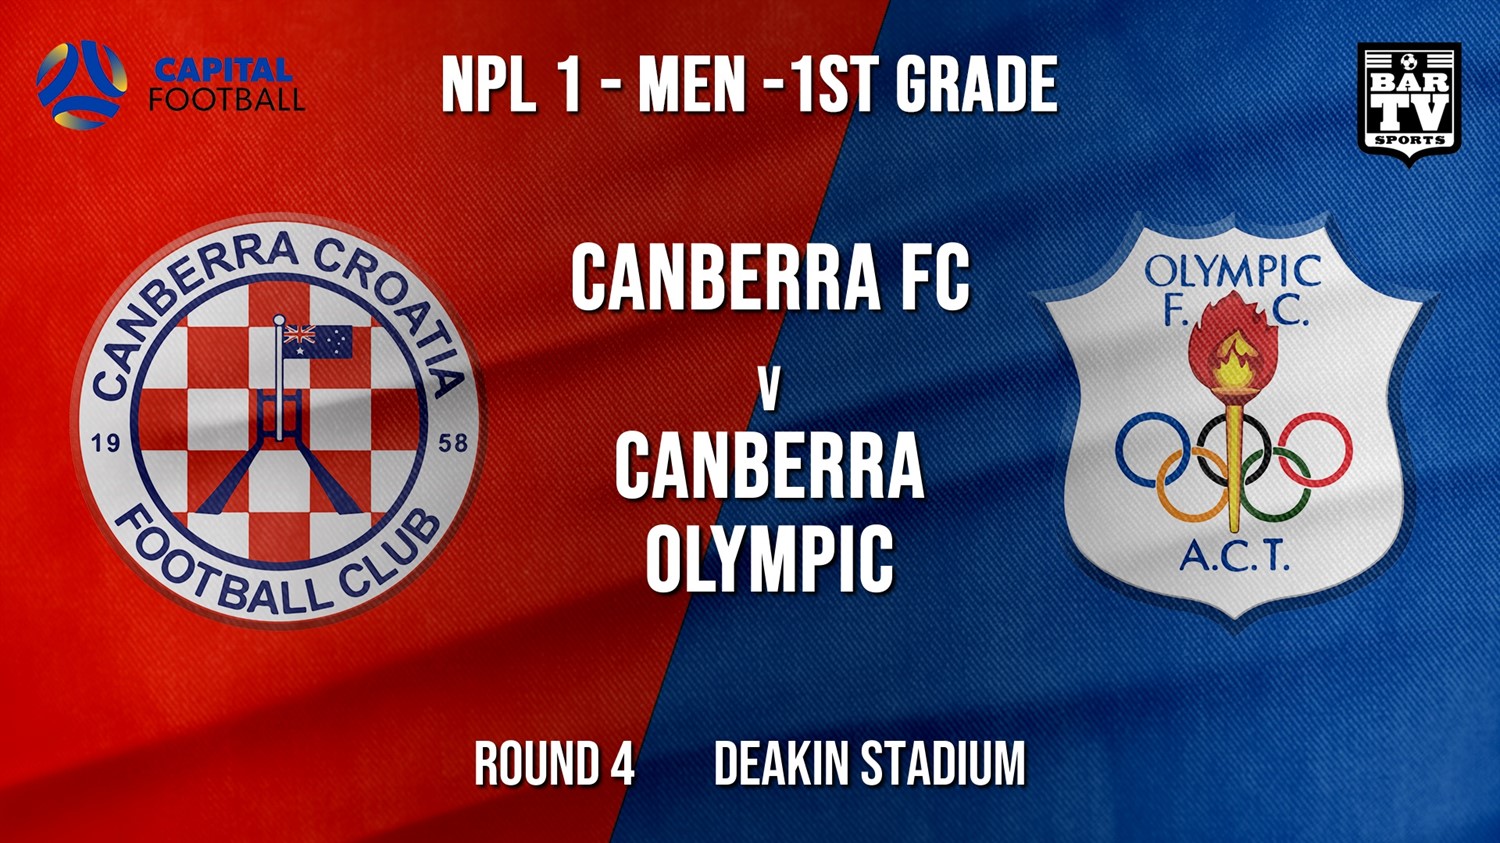 NPL - CAPITAL Round 4 - Canberra FC v Canberra Olympic FC (1) Minigame Slate Image